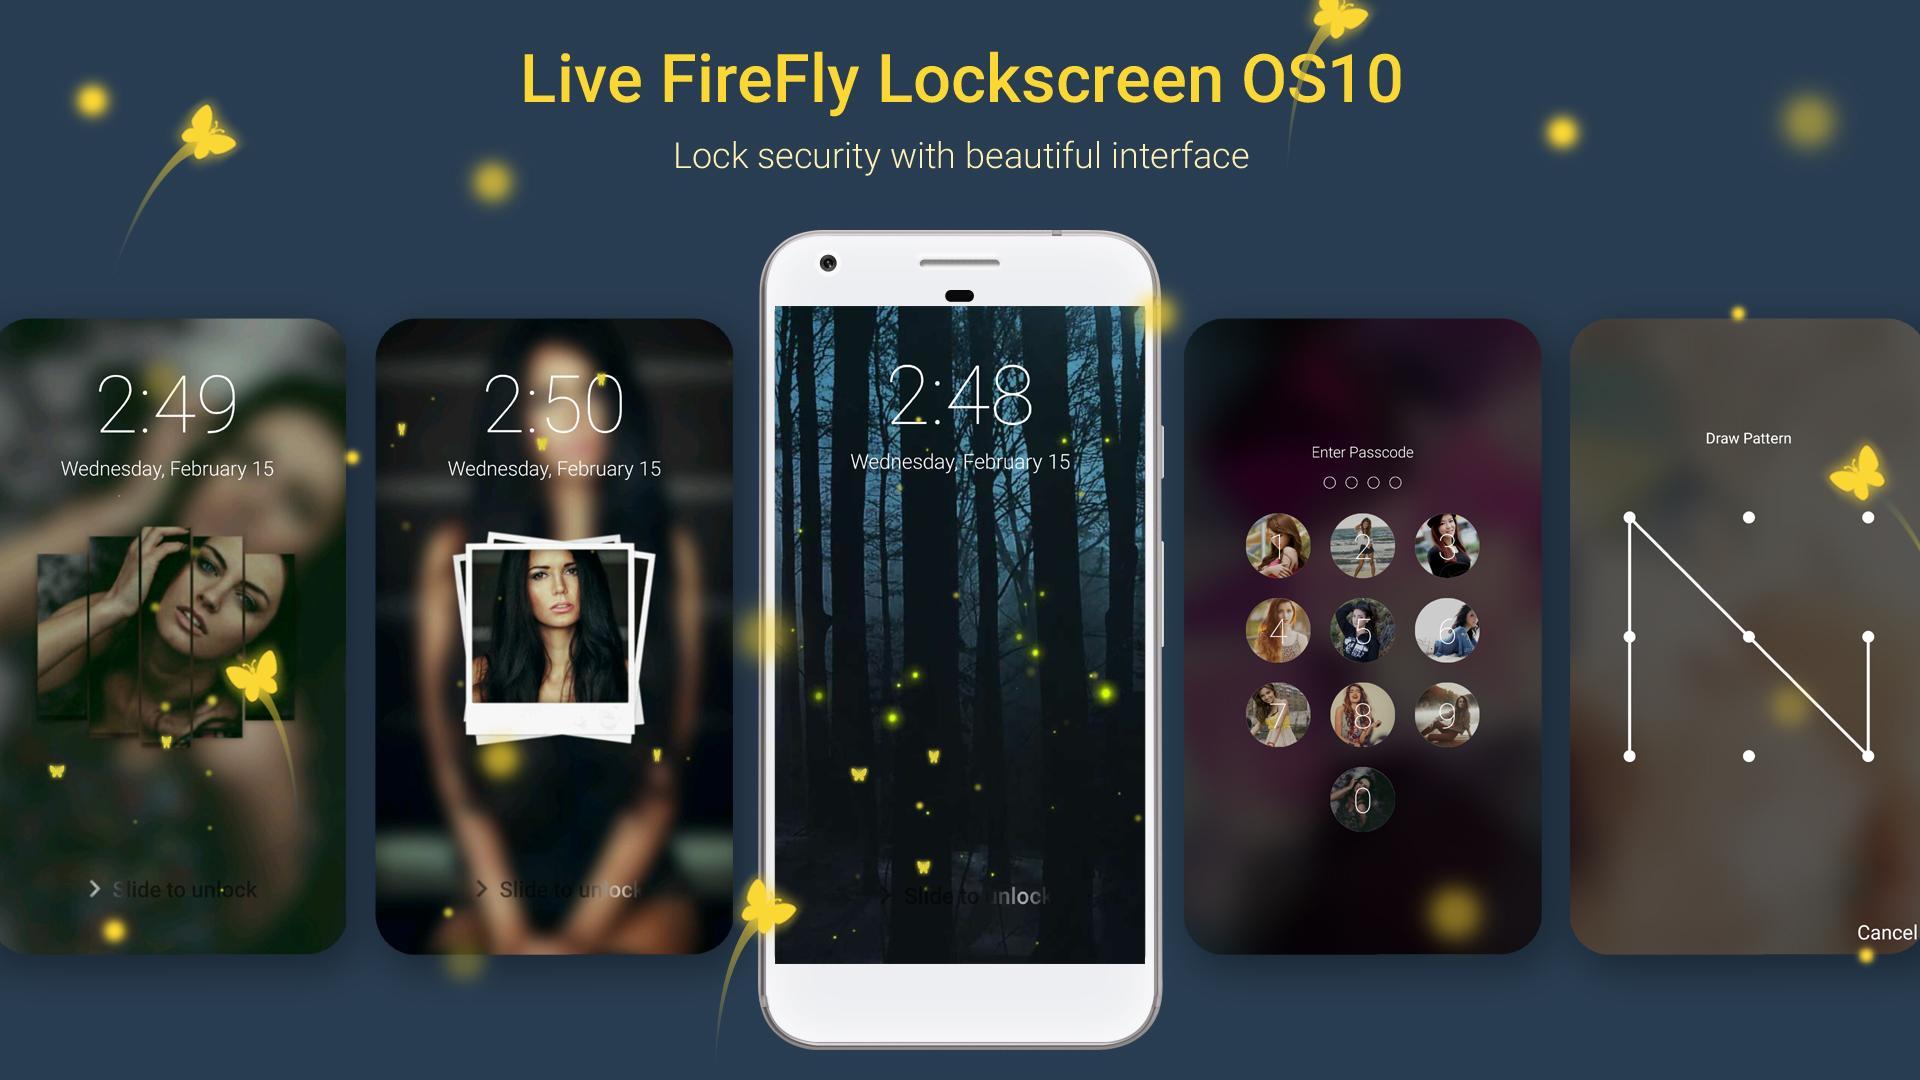 Ilock lock screen os 17. Приложение Firefly. Oxygen os экран блокировки. Oxygen os 10 экран блокировки. Экран блокировки от Sharp.